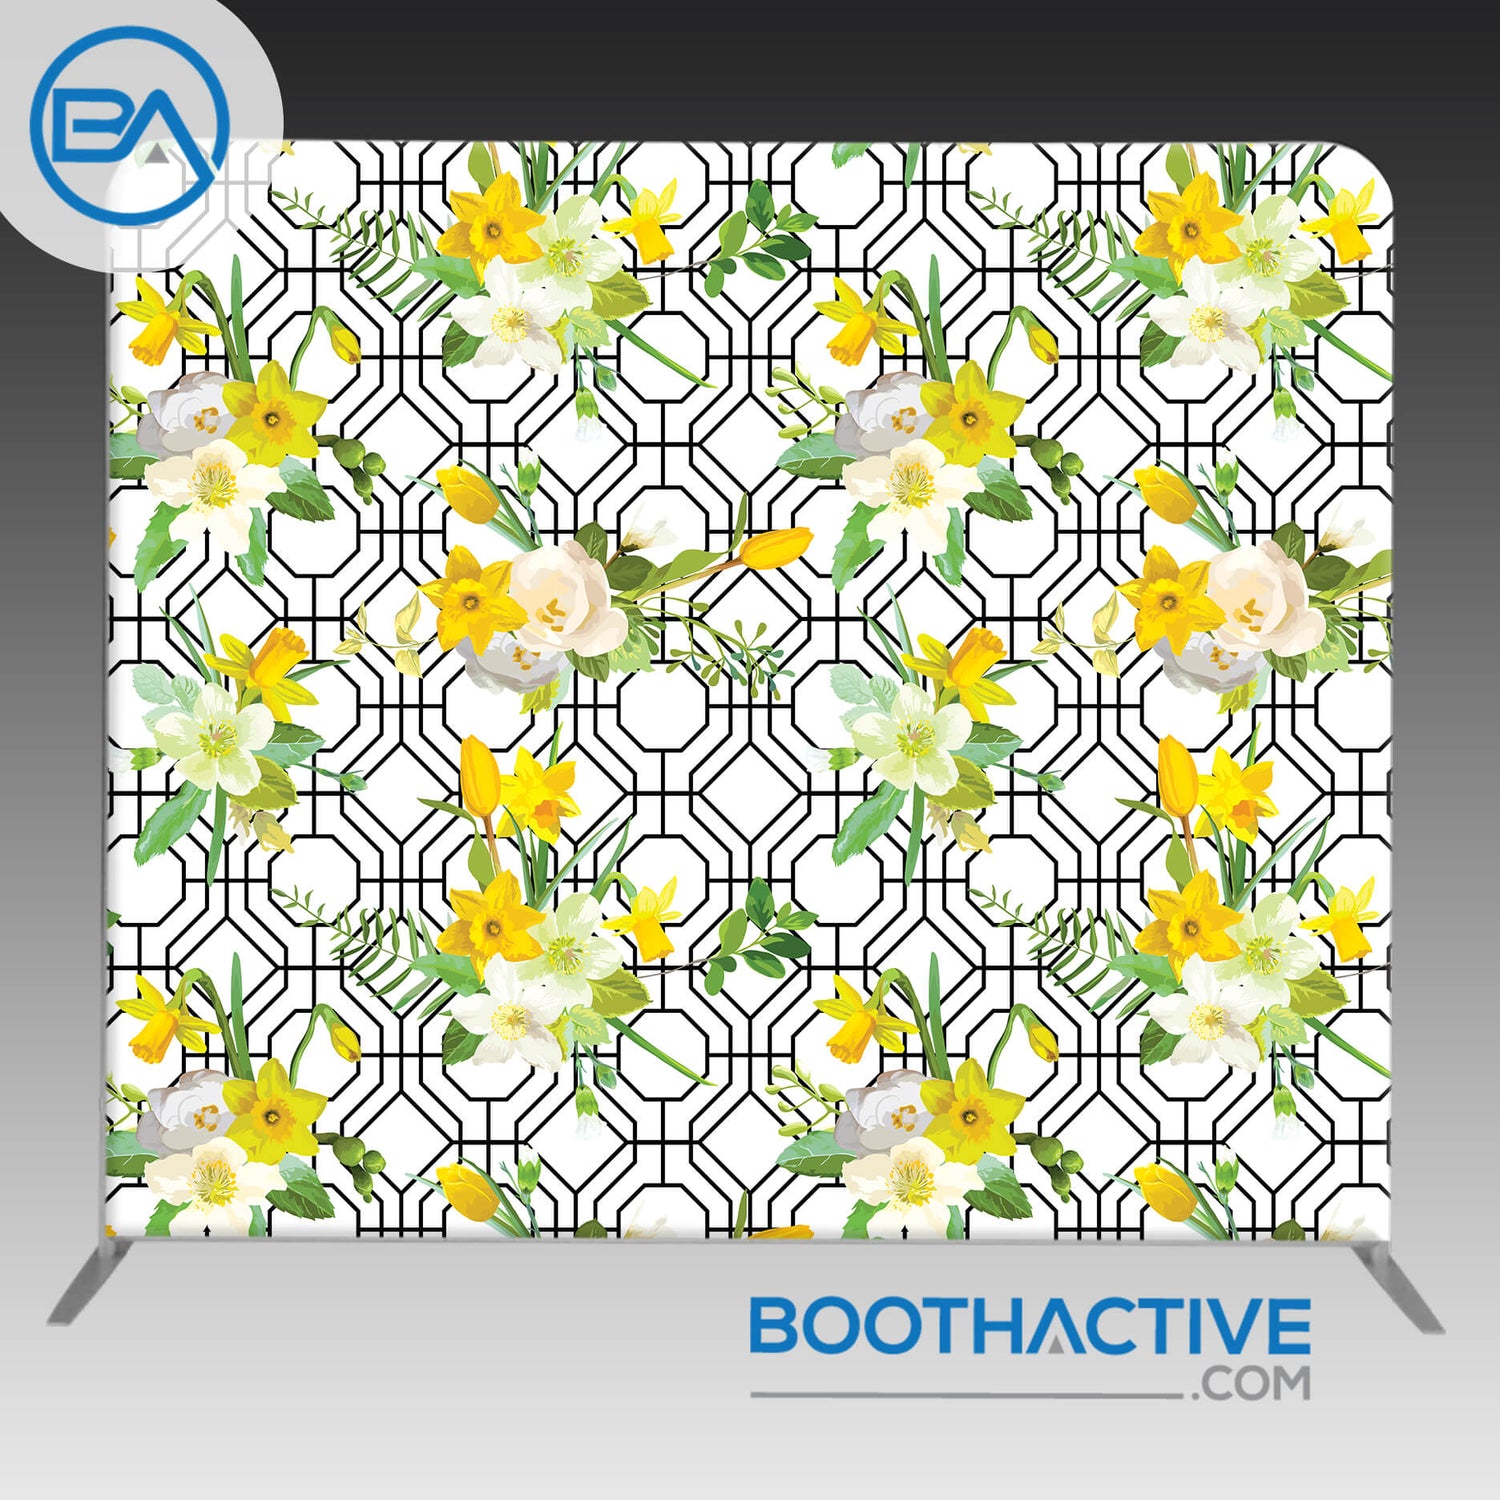 8' x 8' Backdrop - Geometric - Floral 2